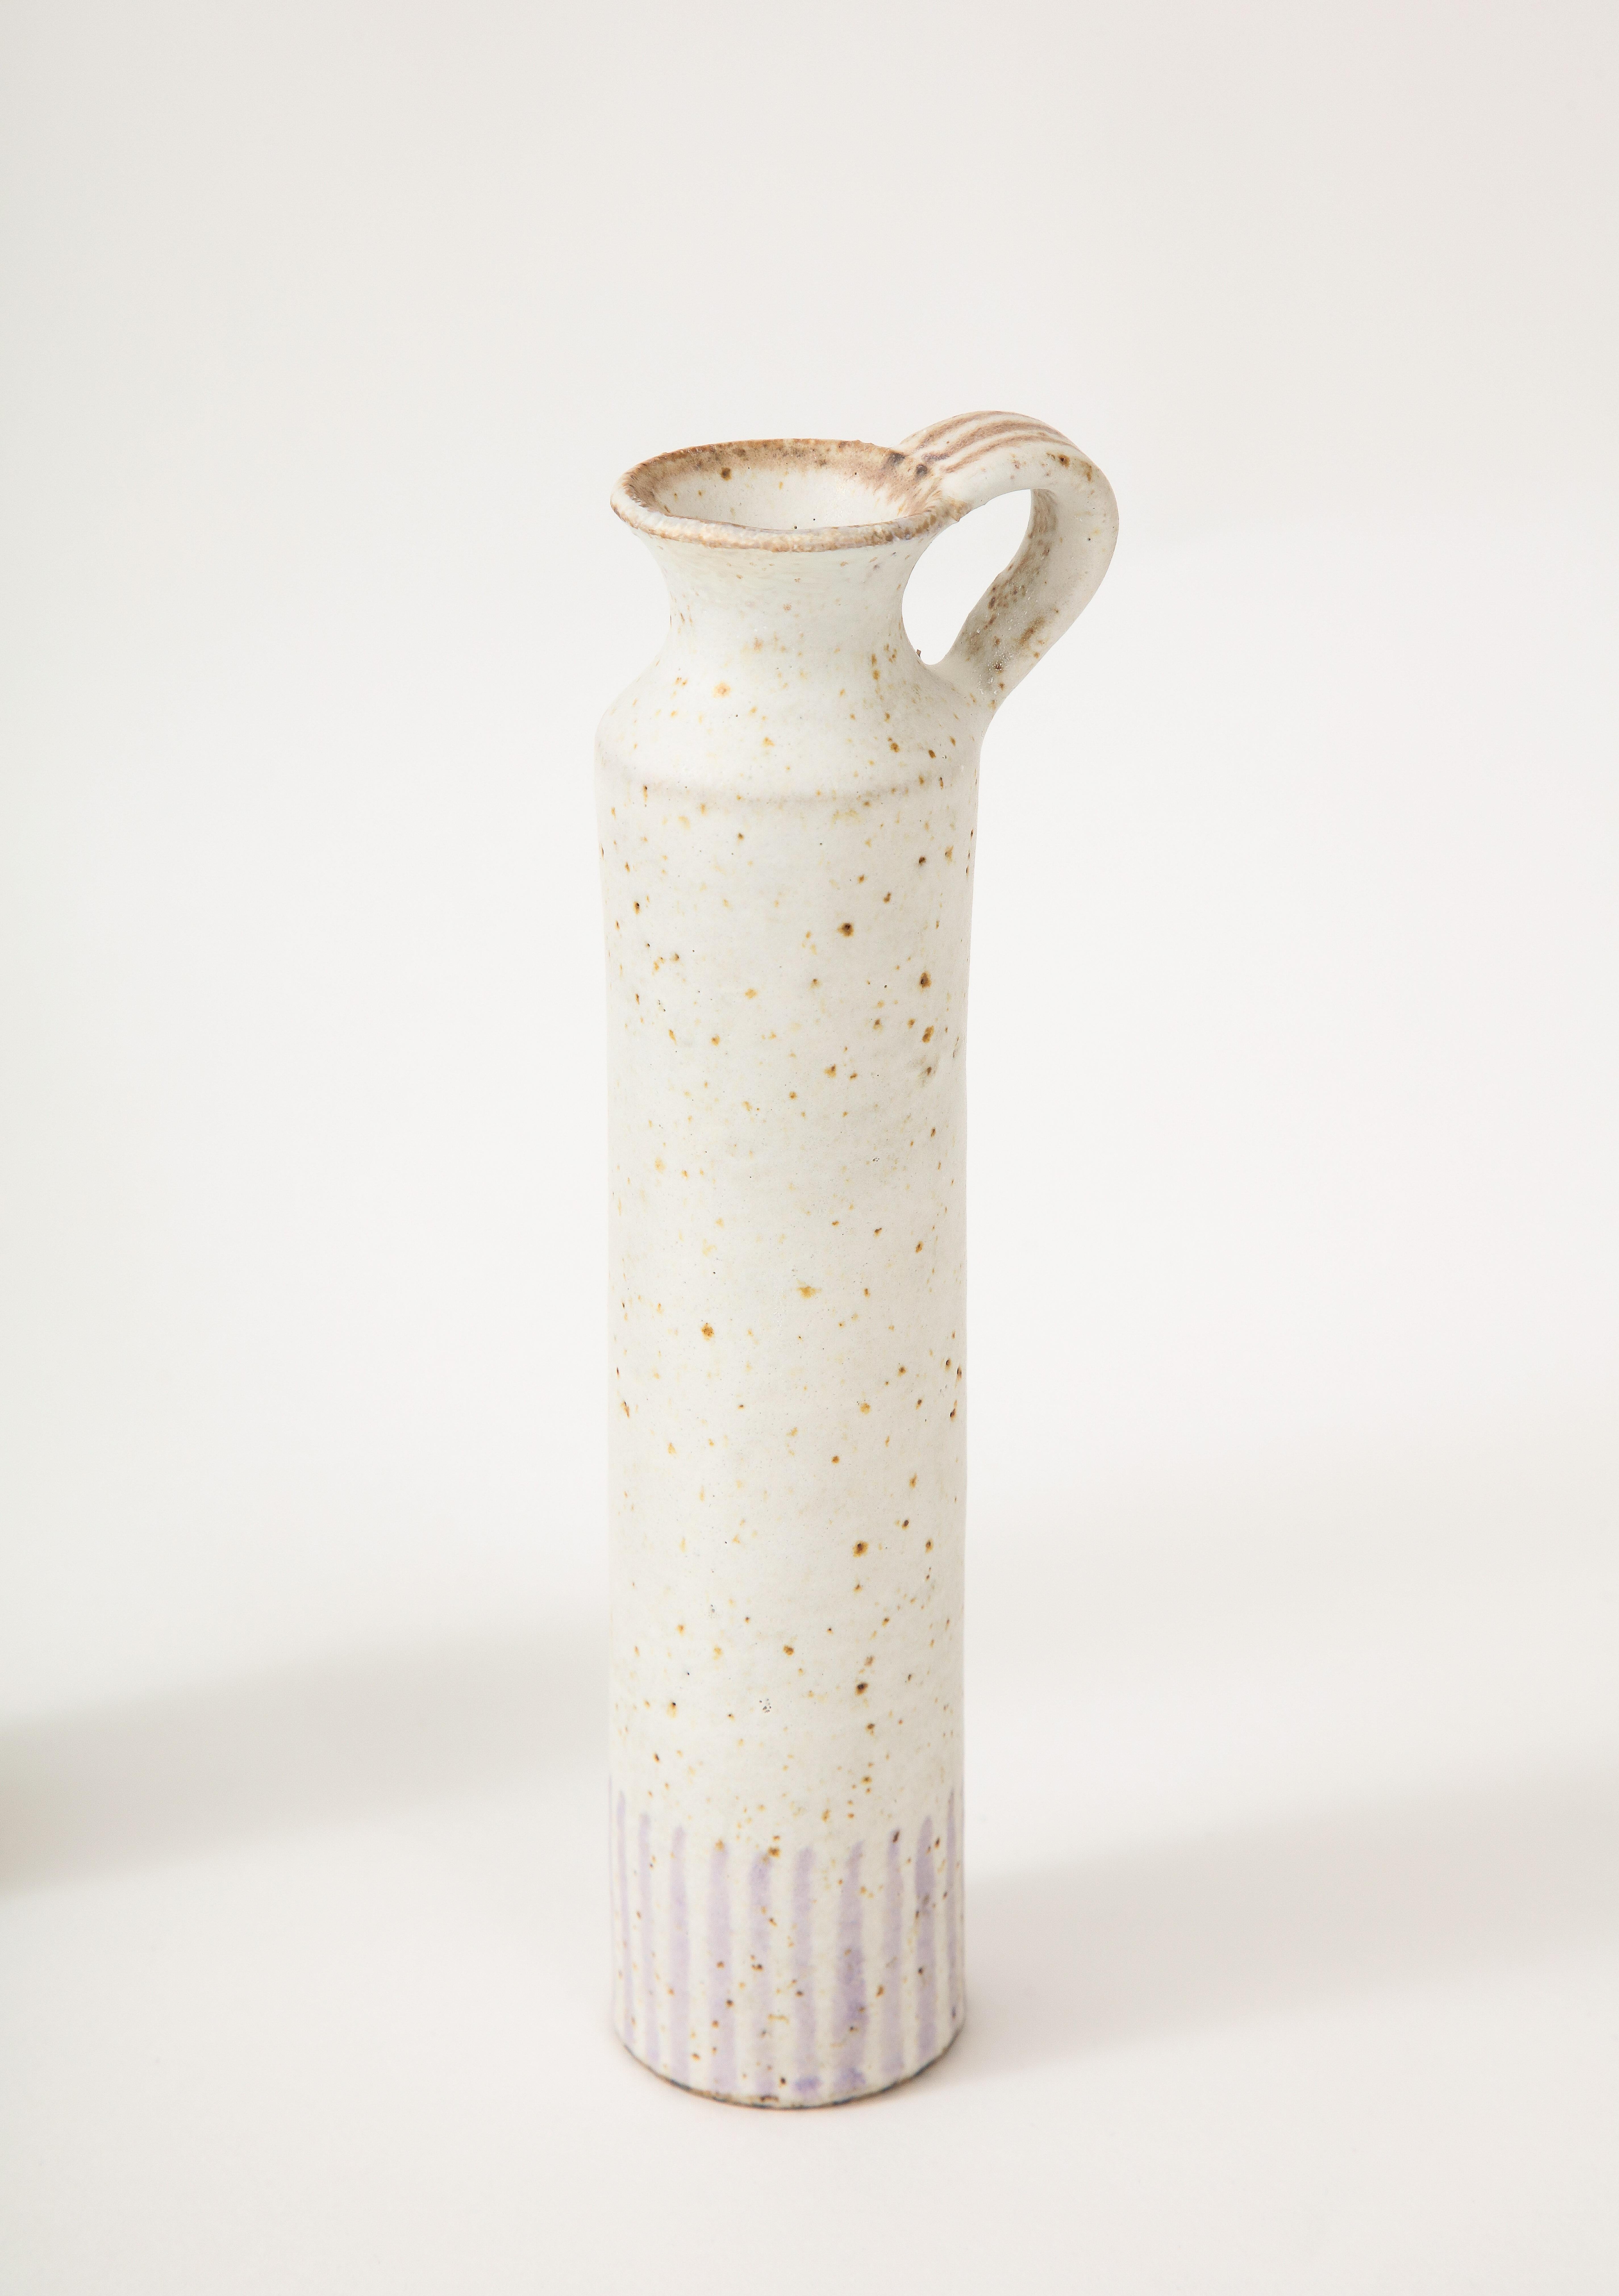 Bruno Gambone Set of Three Small Ceramic or Stoneware Vases, Italy, 1970s For Sale 2